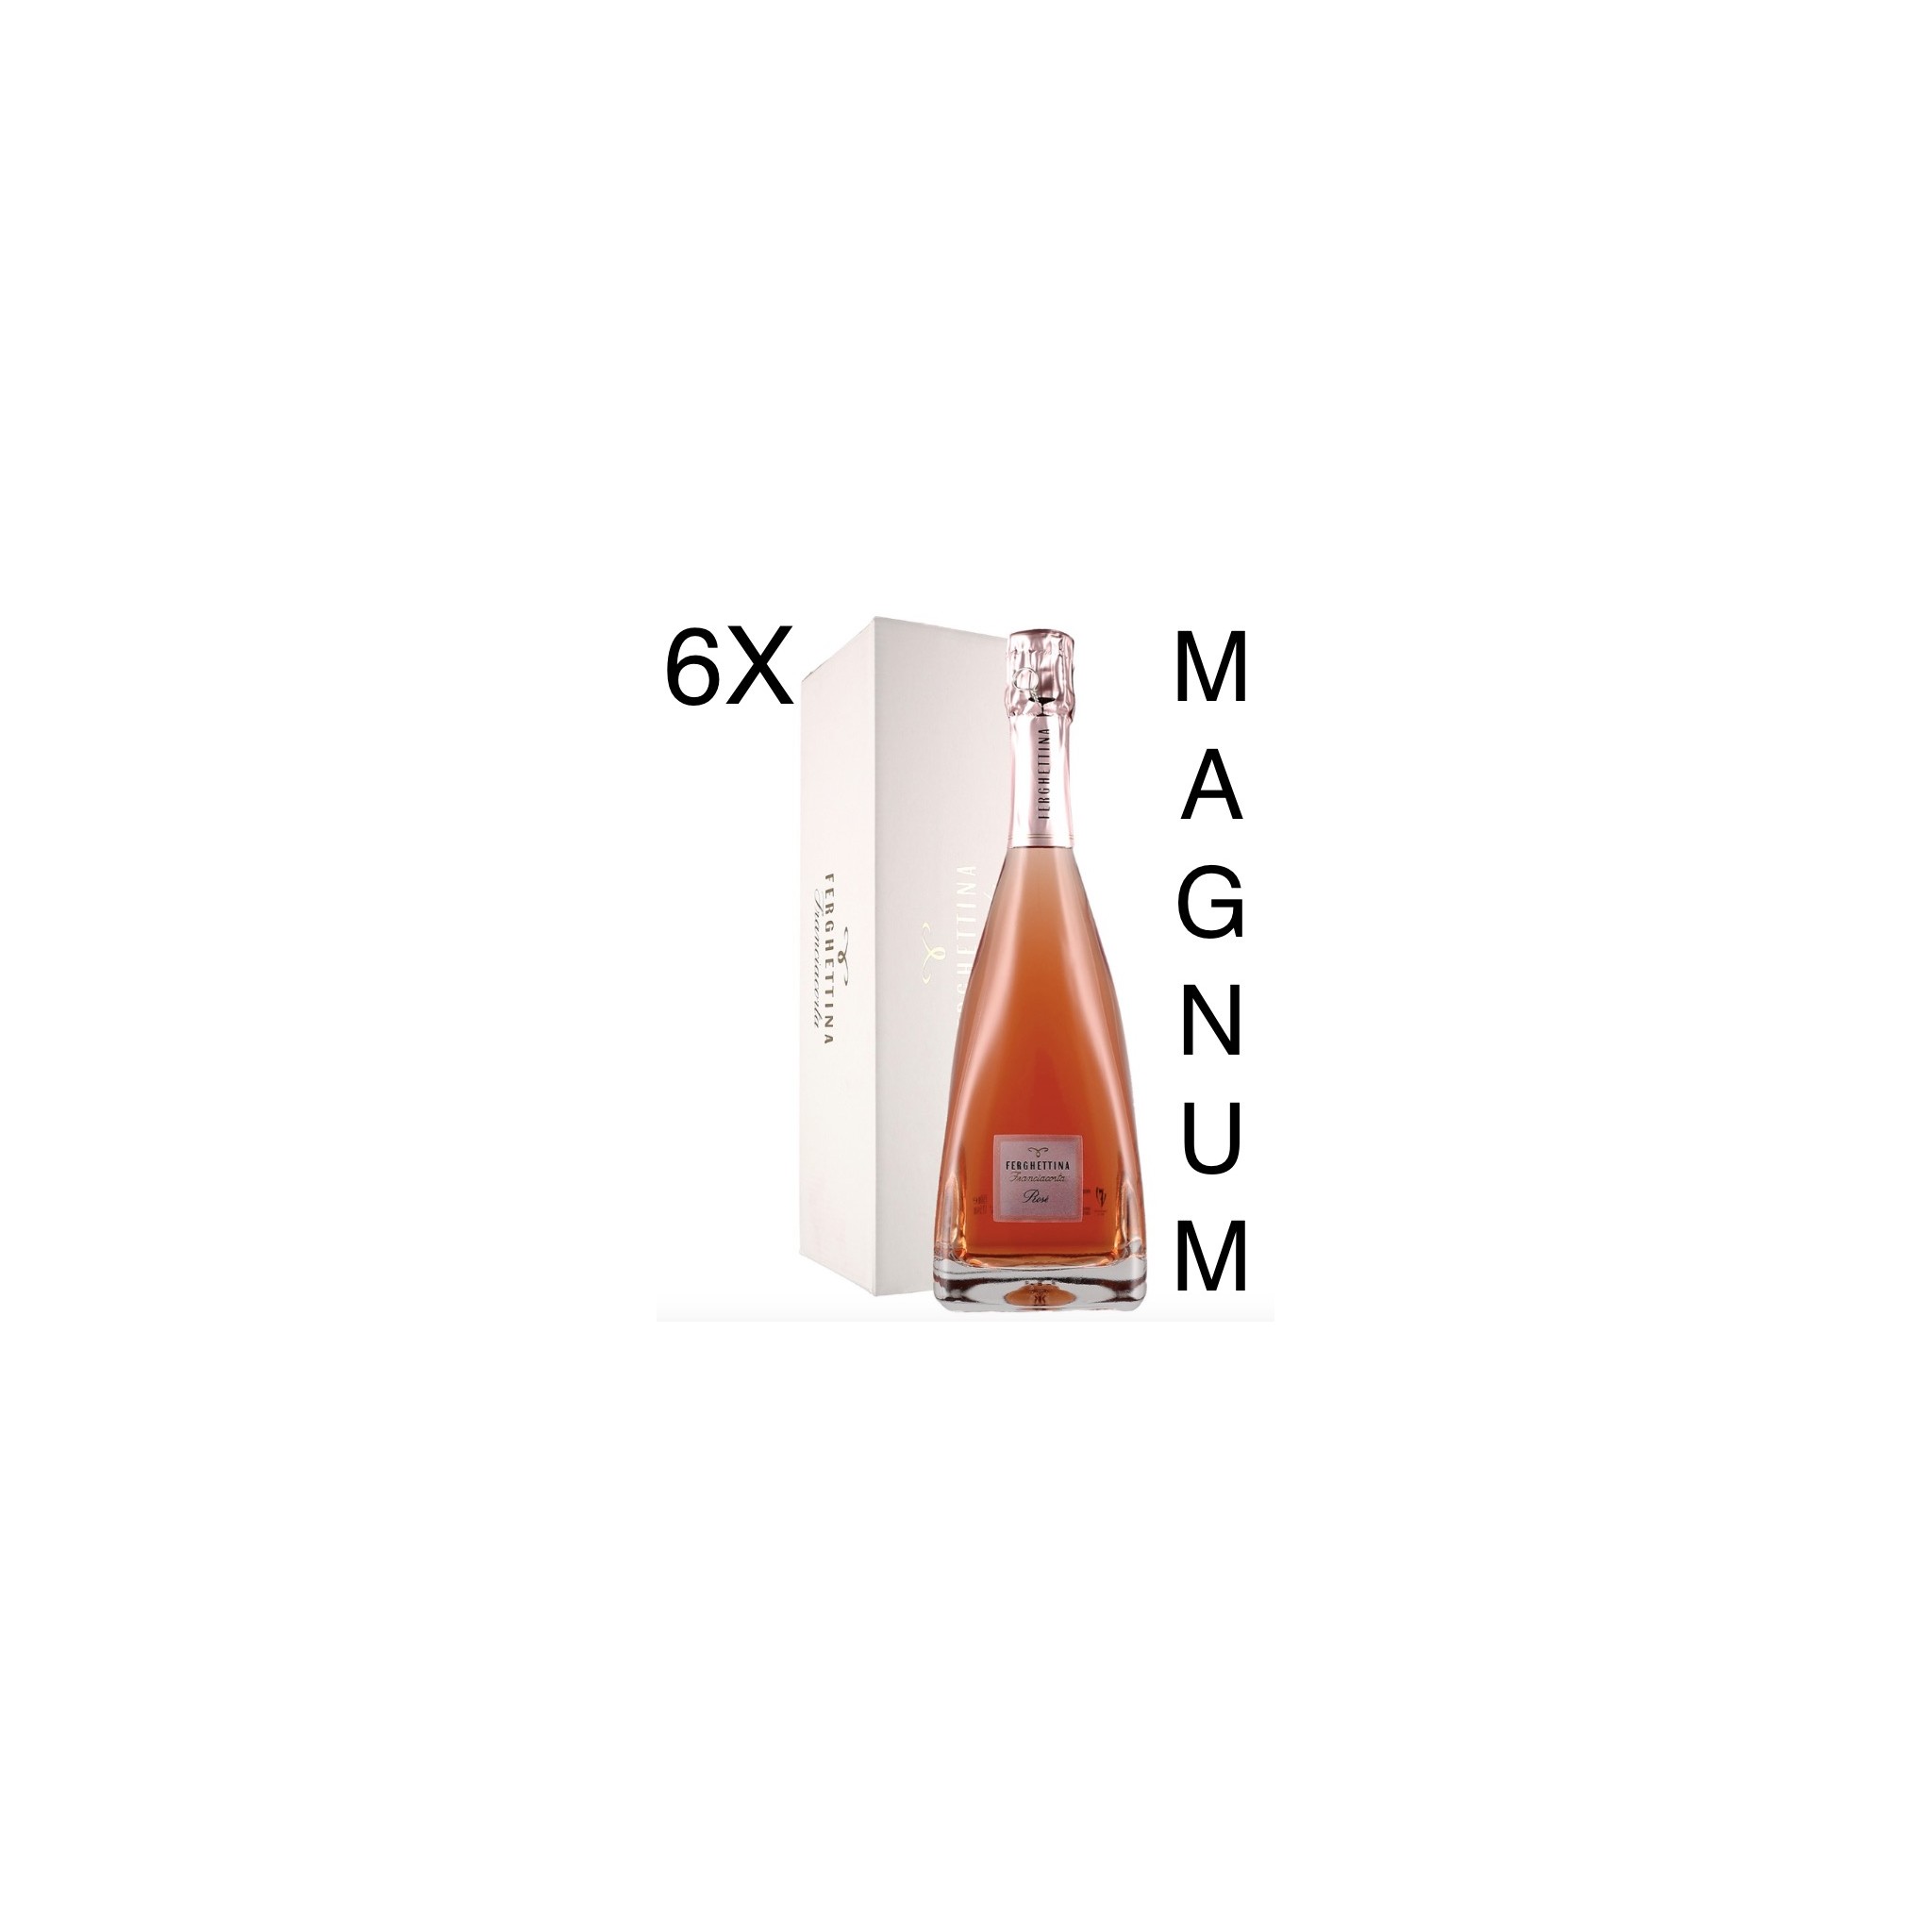 Ferghettina Milledi Rose Magnum Franciacorta Online Sale Bubbles Wine Shop Square Bottle Exclusive Sparkling Wines